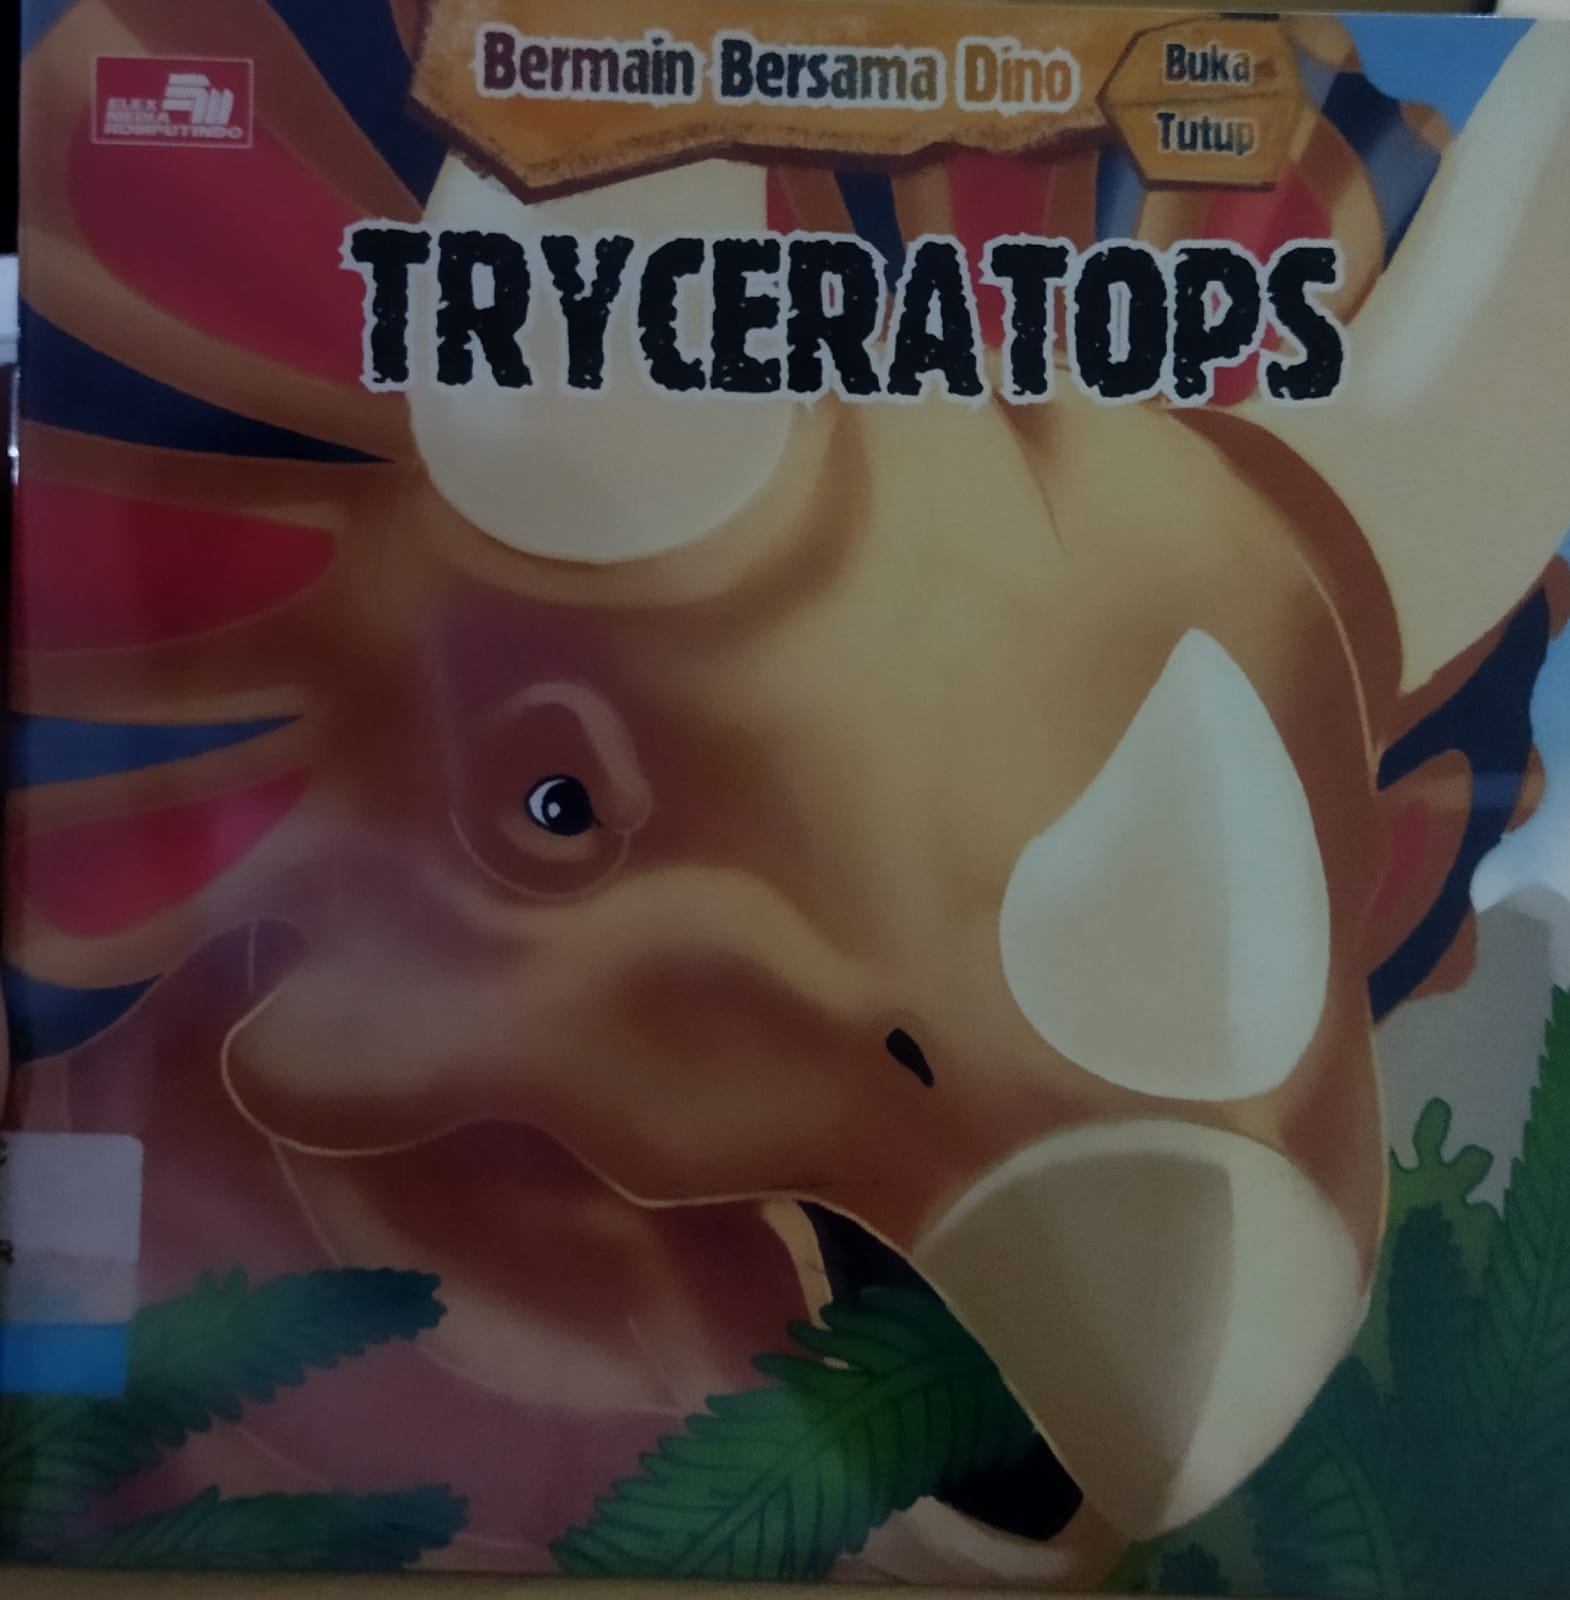 BERMAIN bersama dino tryceratops